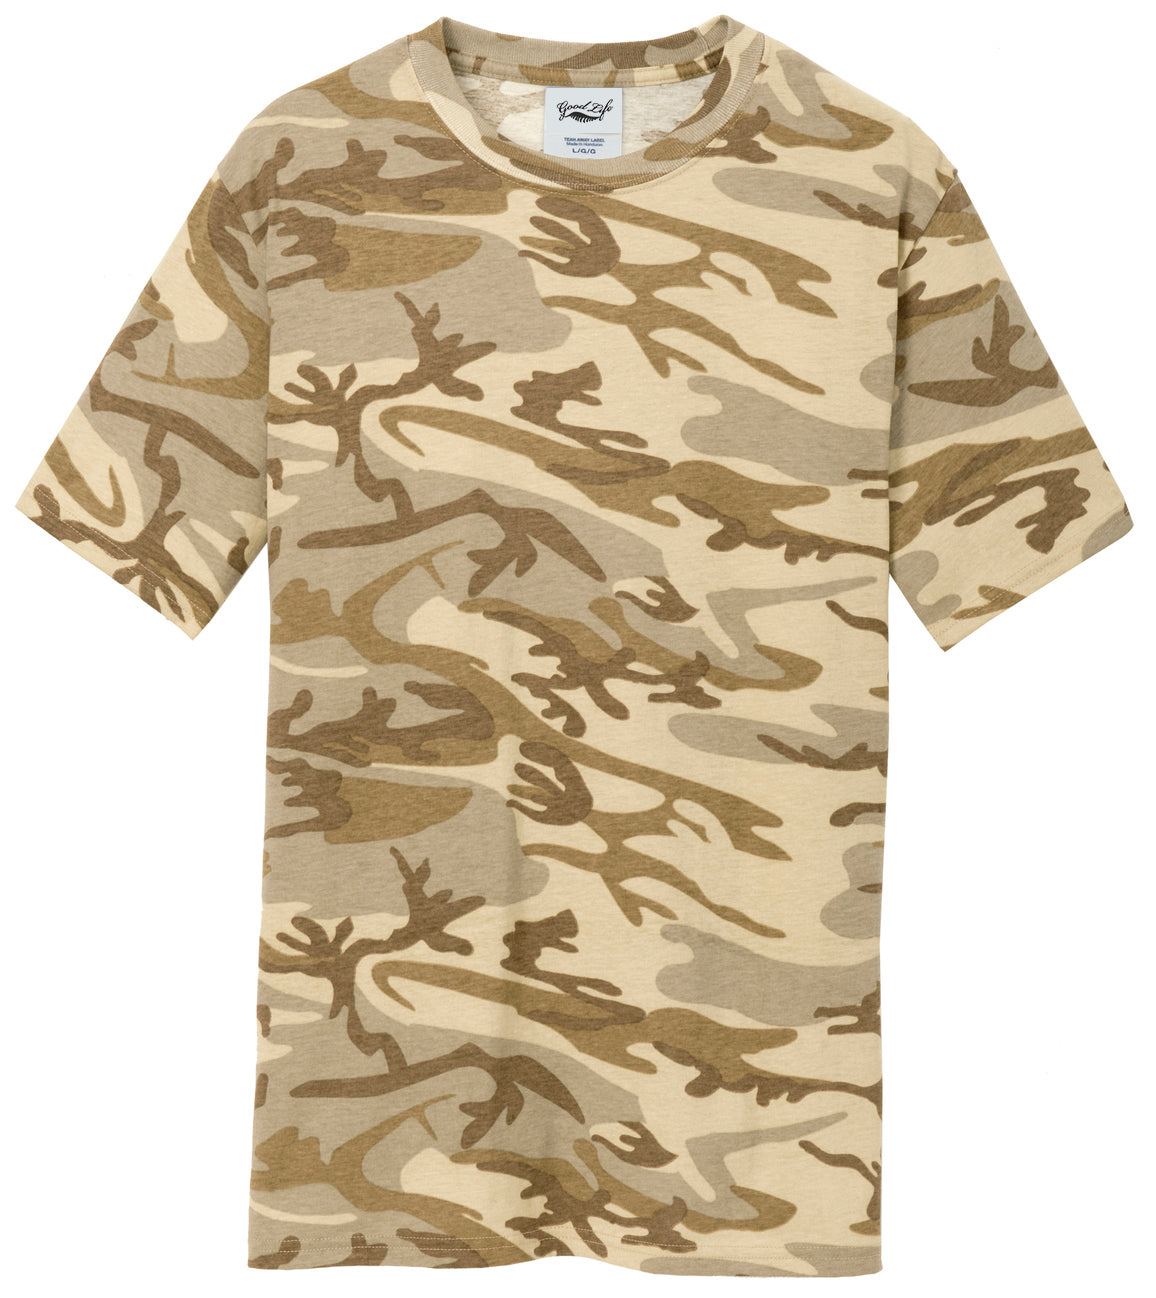  Camo1 Shirt Men's Summer Military Style Multi Pocket